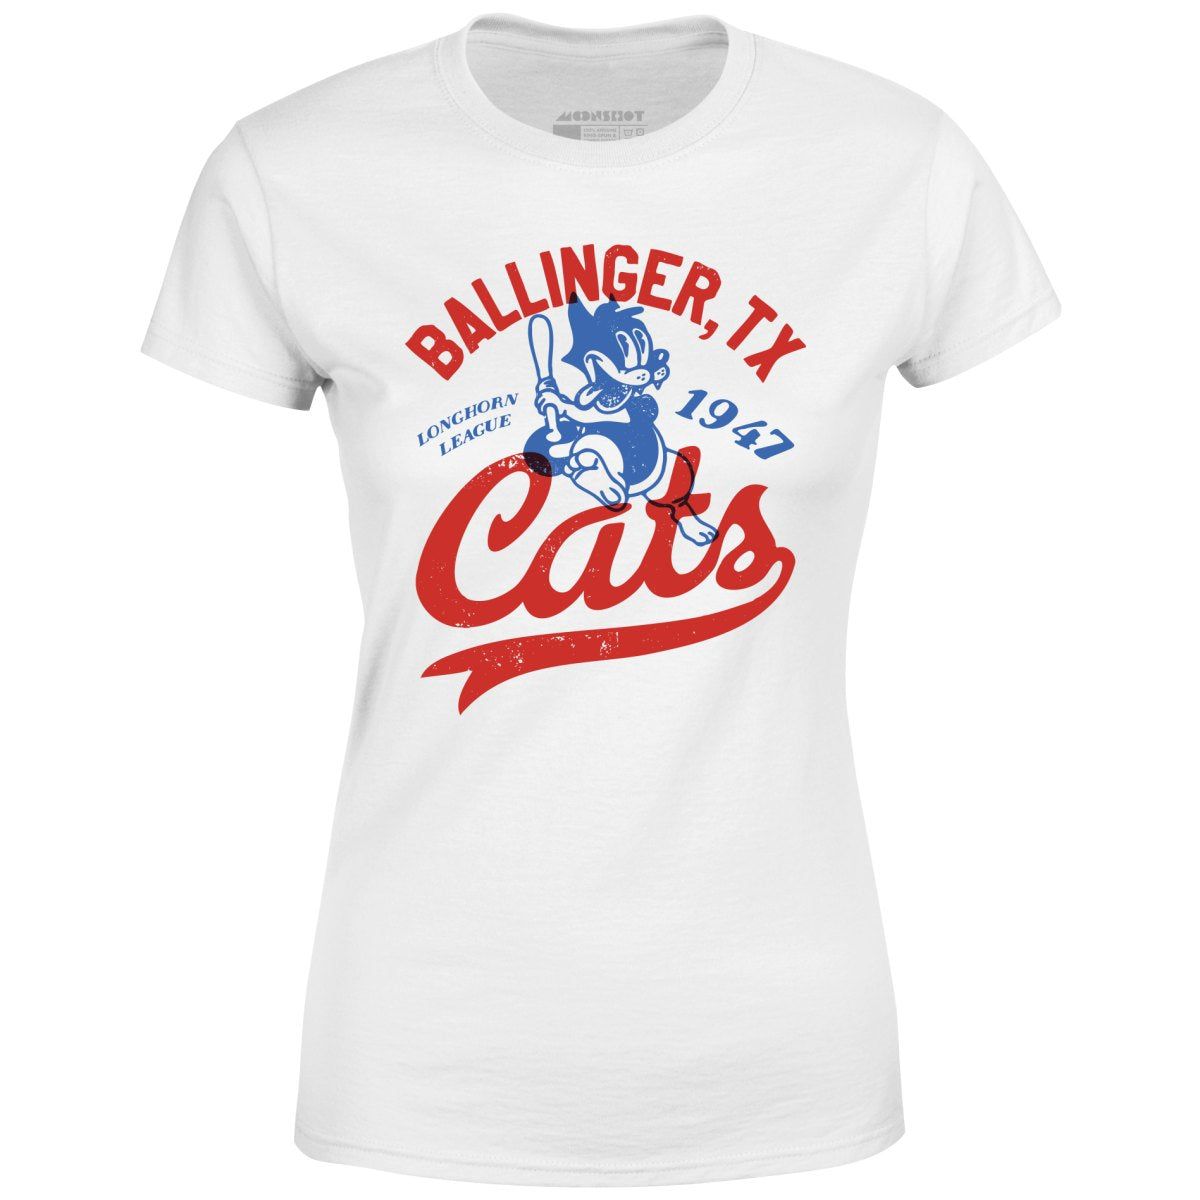 Ballinger Cats - Texas - Vintage Defunct Baseball Teams - Women's T-Shirt